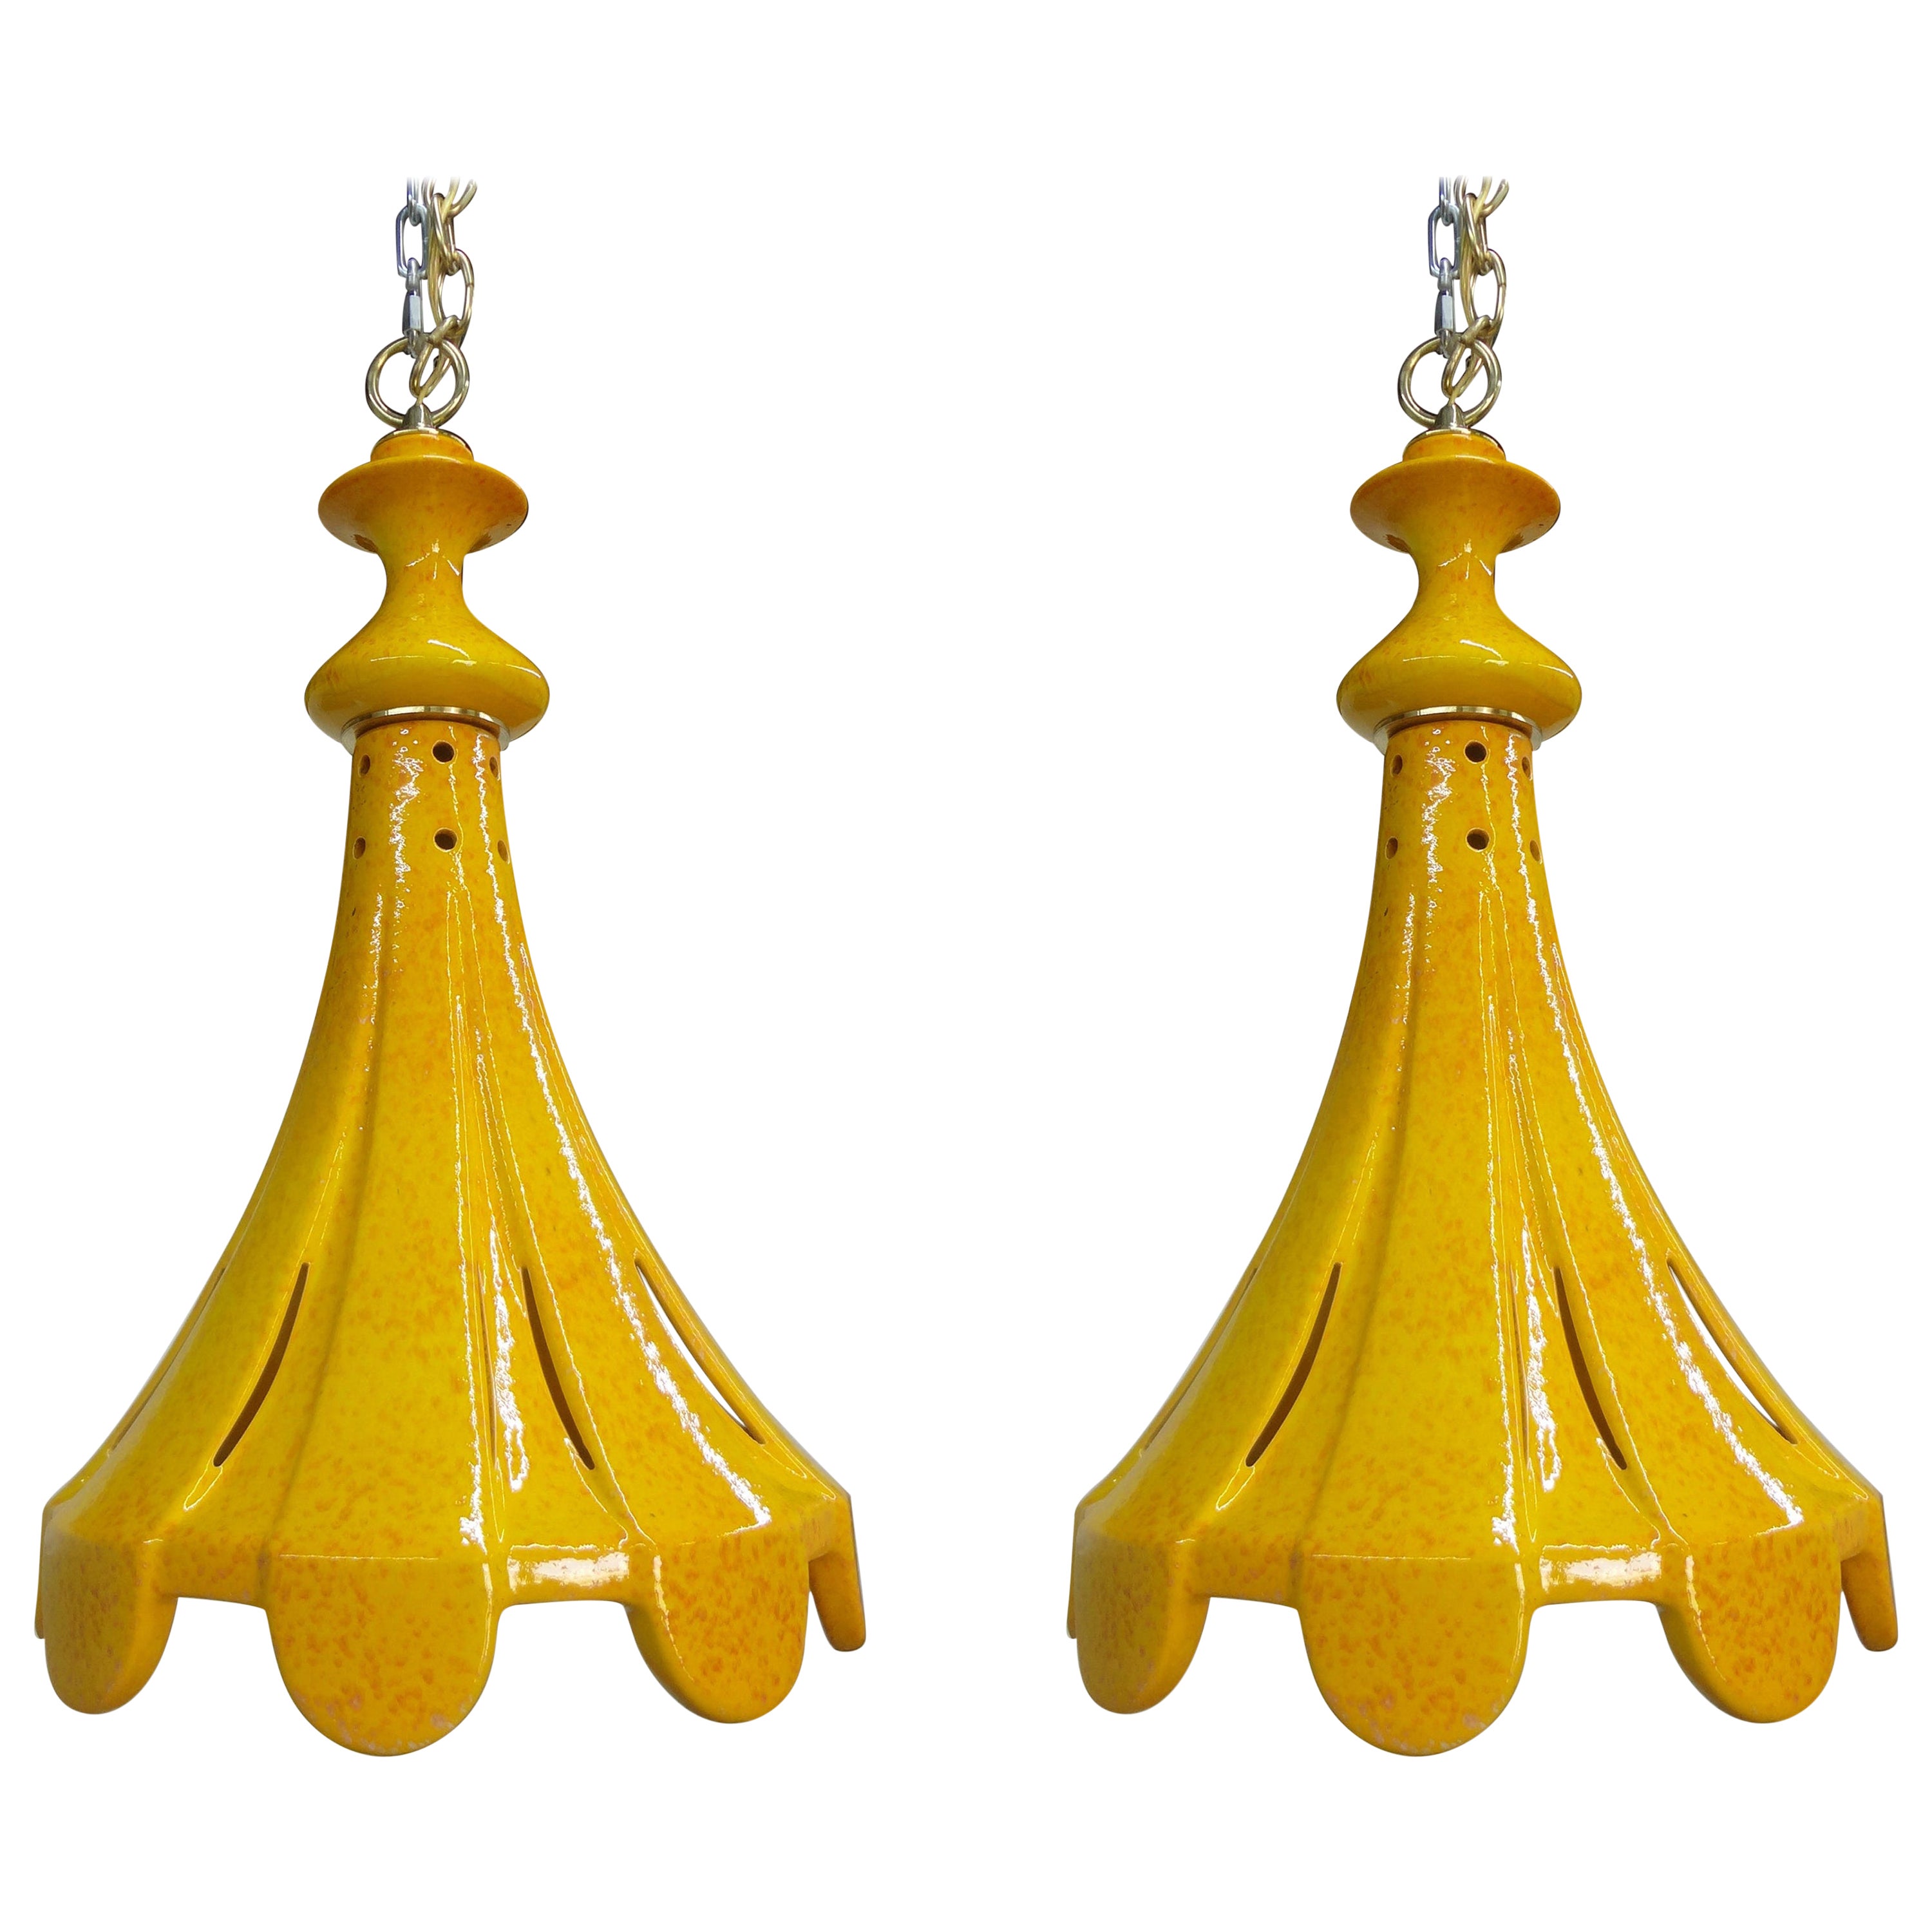 Pair of Italian Glazed Ceramic Pendants or Lanterns